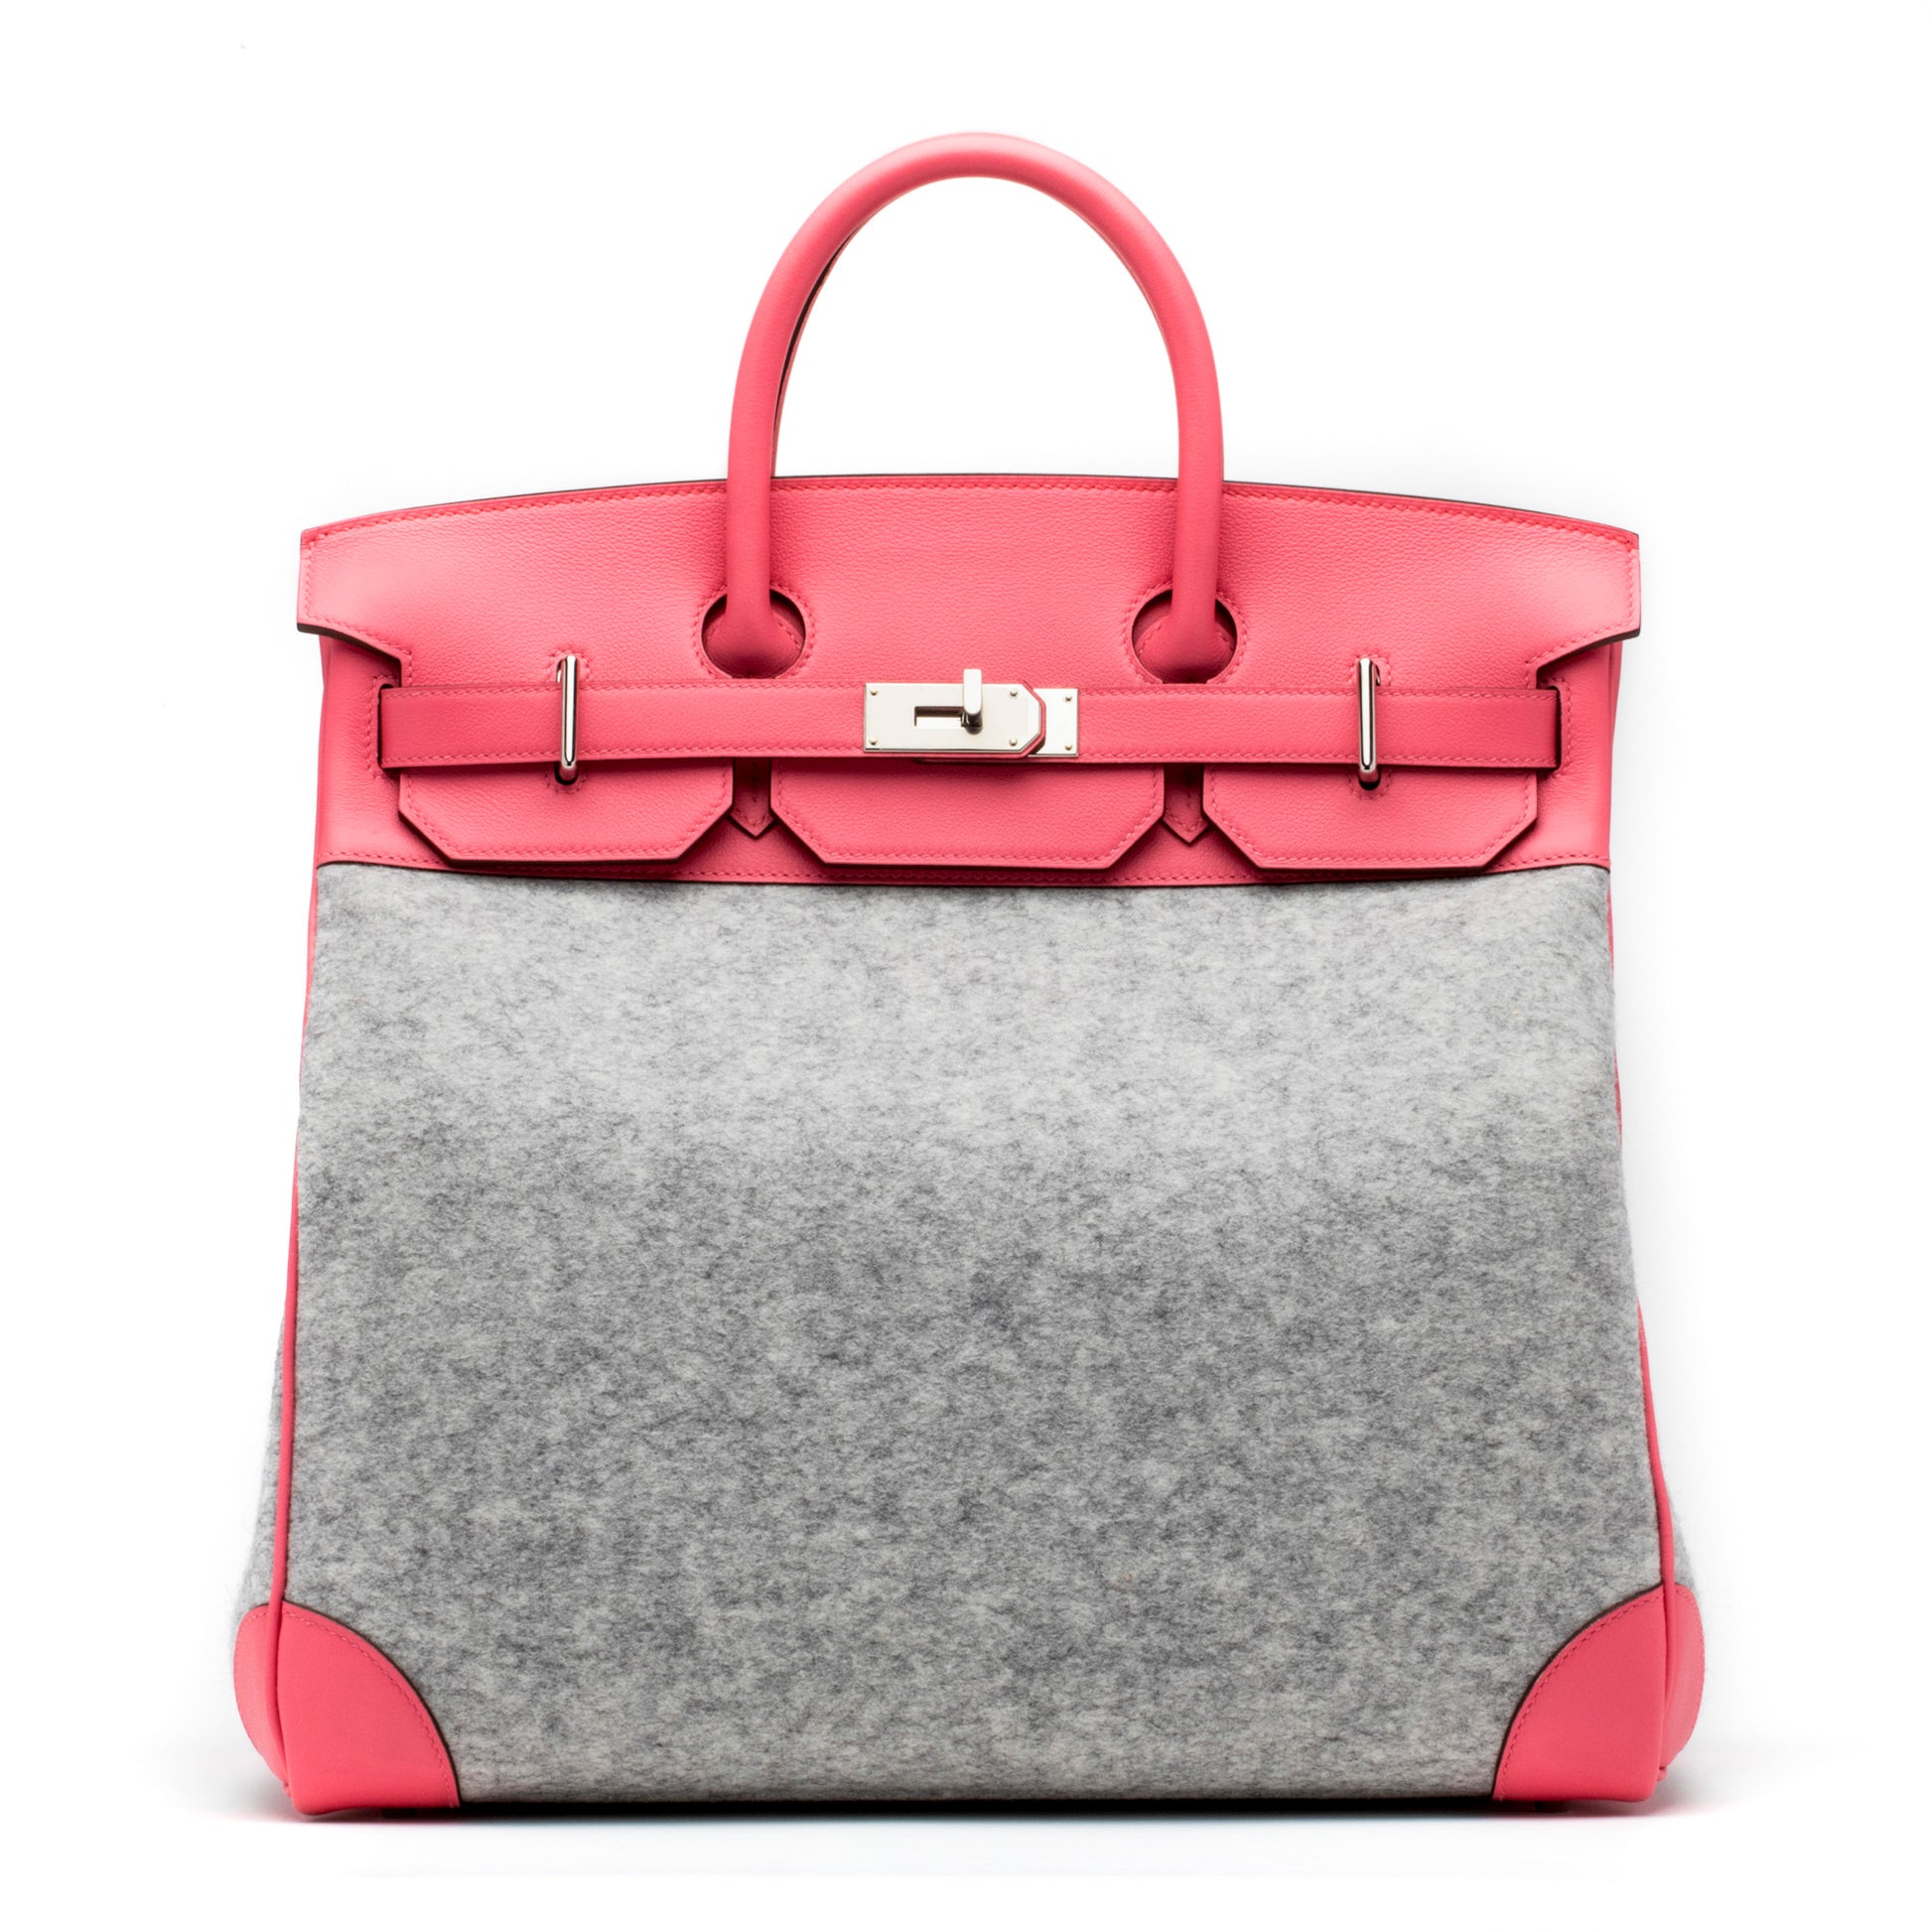 Hermes Birkin 40cm  Hermes handbags, Fashion, Hermes birkin